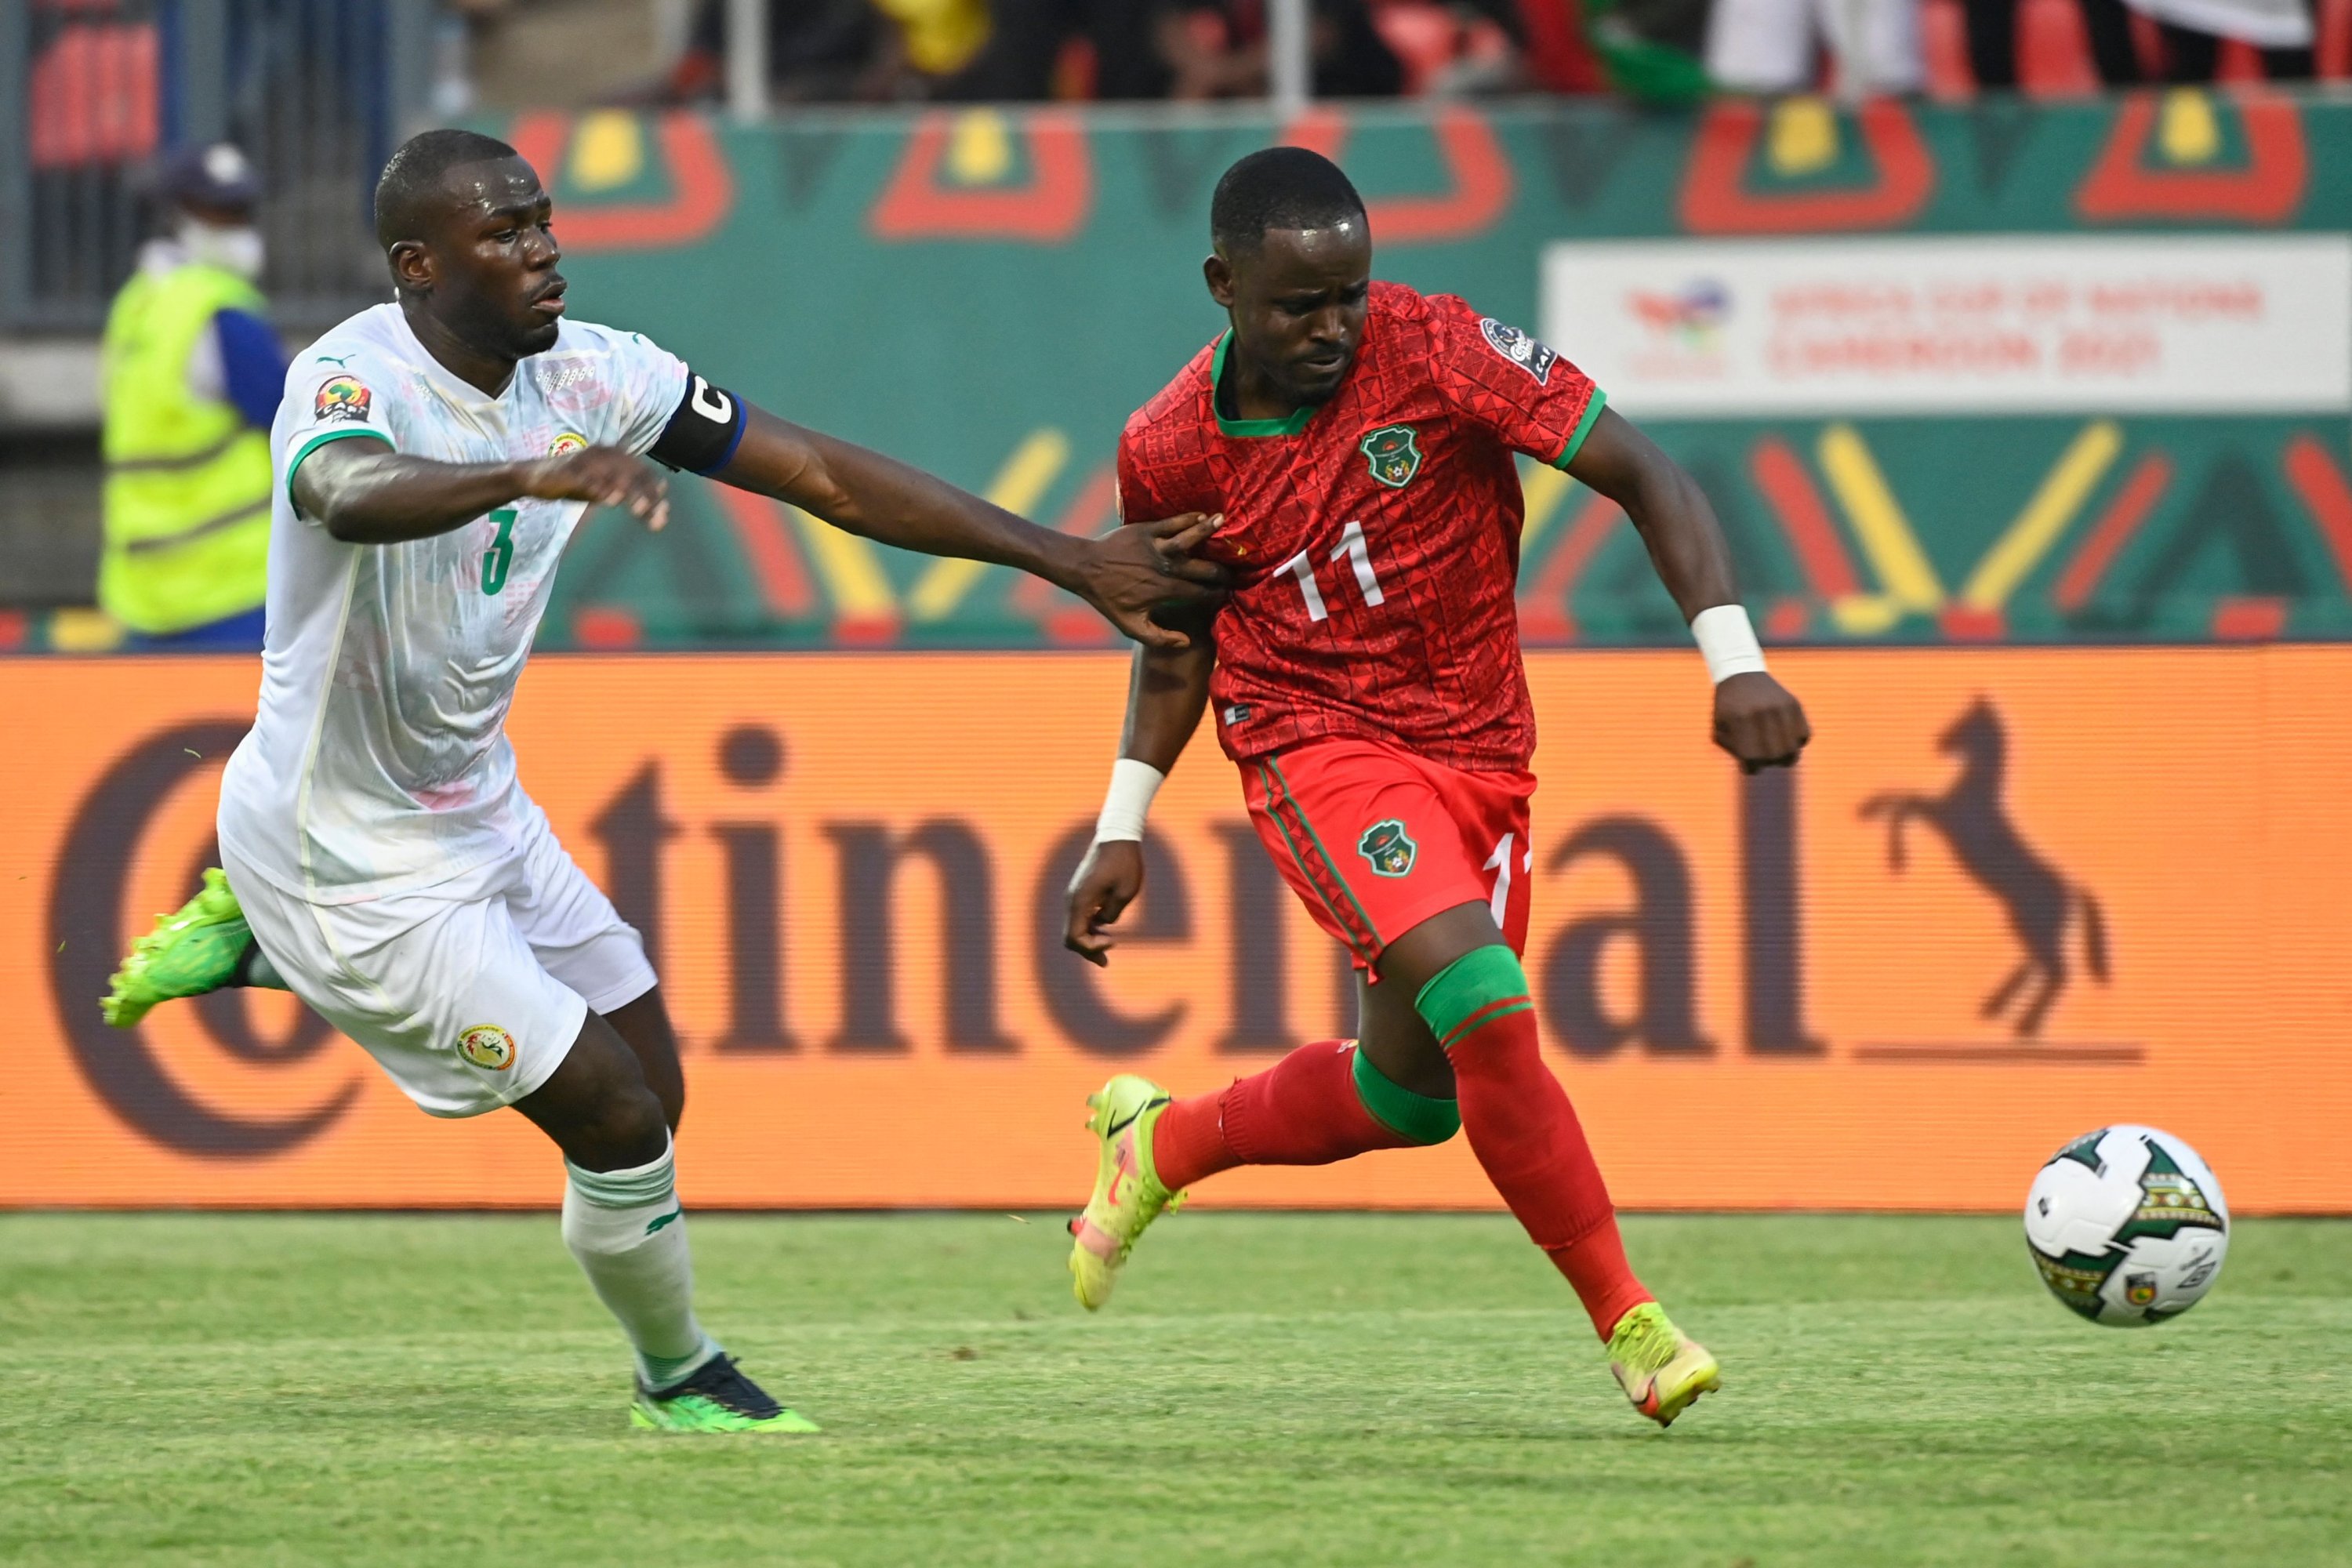 Bek Senegal Kalidou Koulibaly (kiri) berebut bola dengan penyerang Malawi Gabadinho Mhango (kanan) dalam pertandingan Piala Afrika 2021 melawan Malawi, Bafoussam, Kamerun, 18 Januari 2022. (AFP Photo)